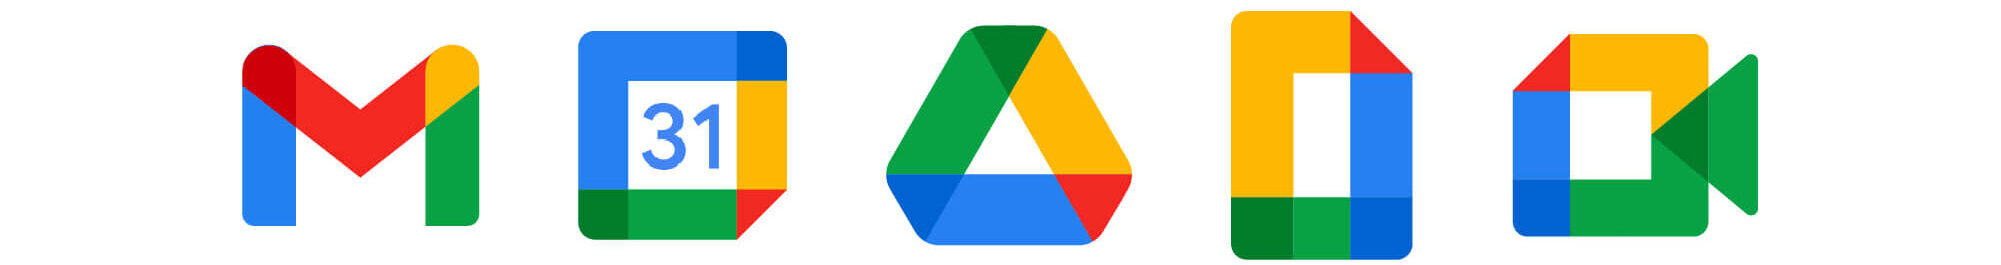 Google workspace apps 